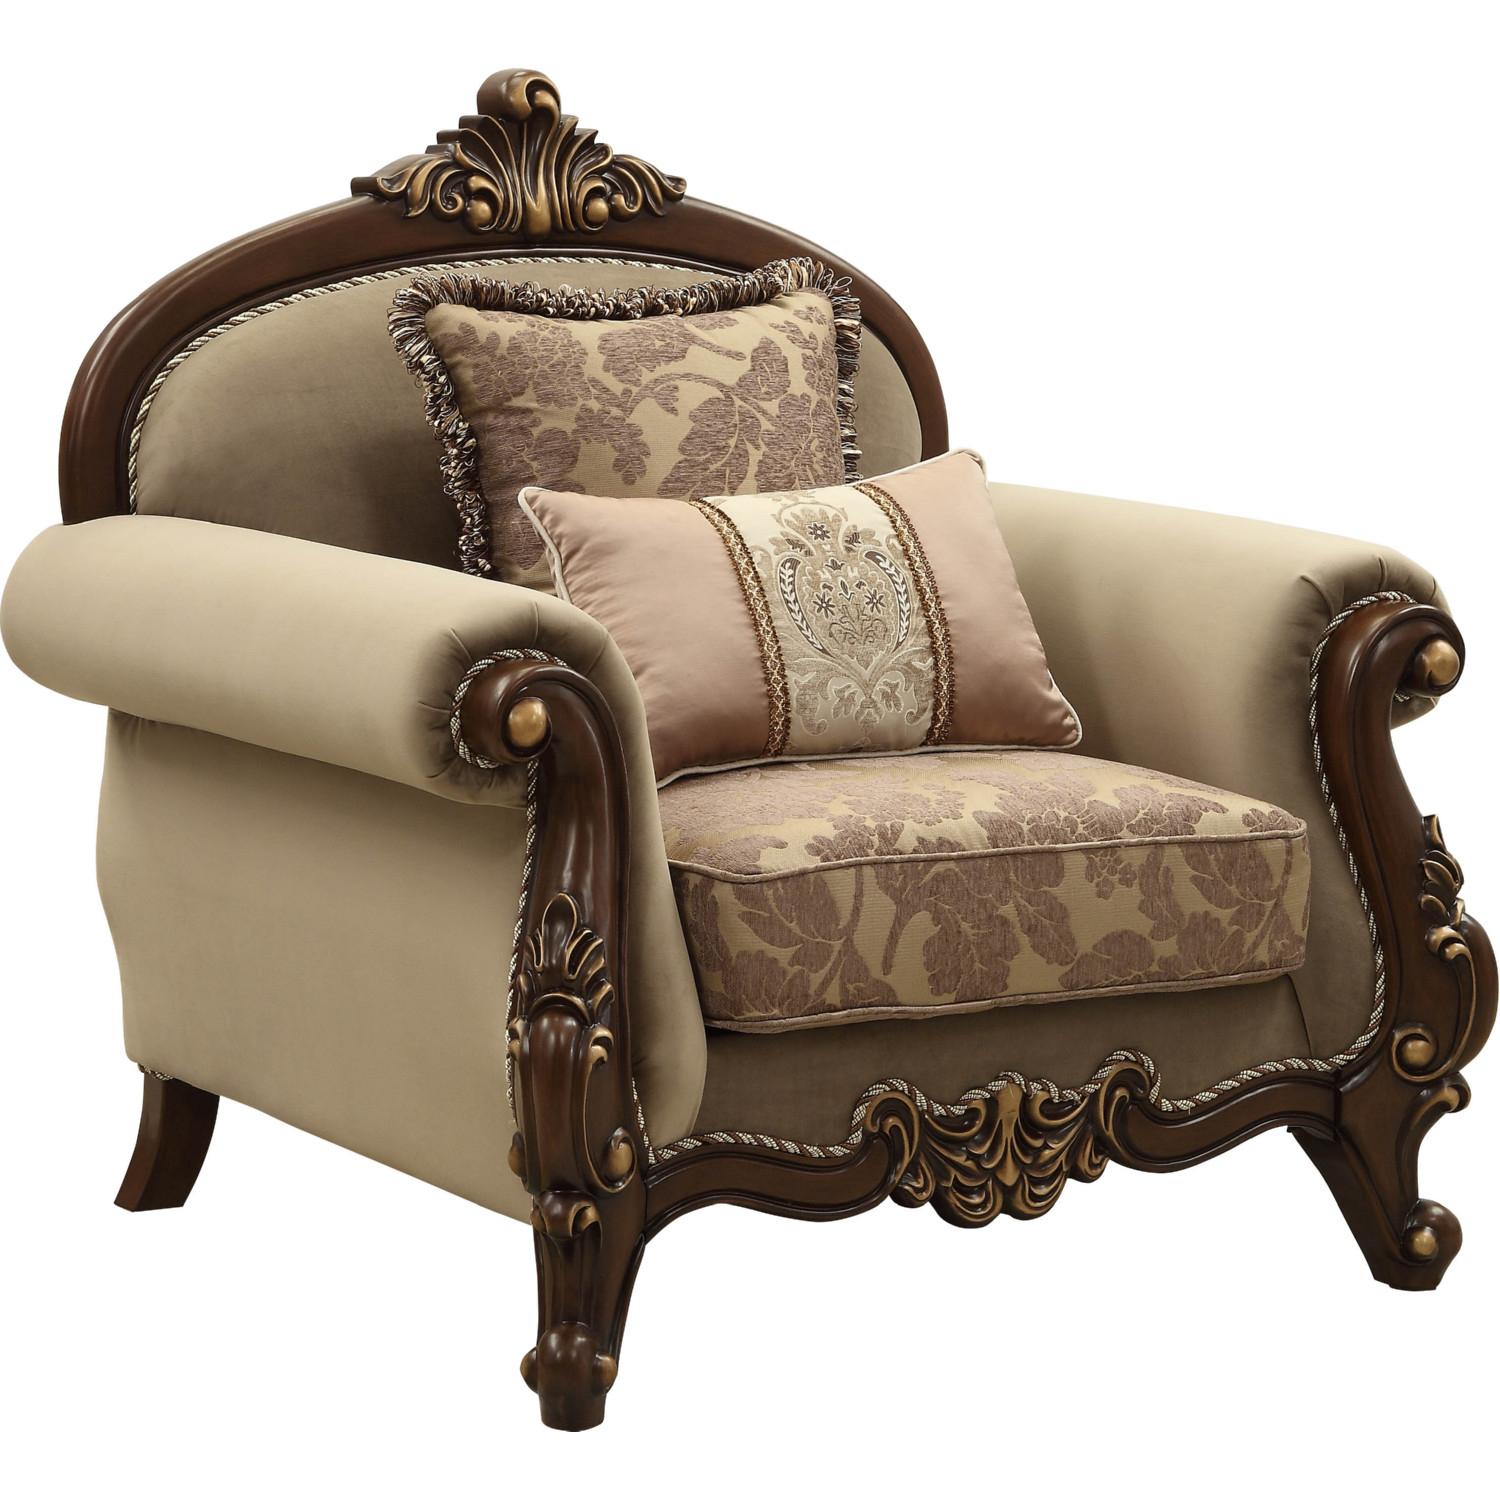 Classic, Traditional Arm Chair Mehadi 50692 50692-Mehadi in Walnut, Tan, Beige Fabric